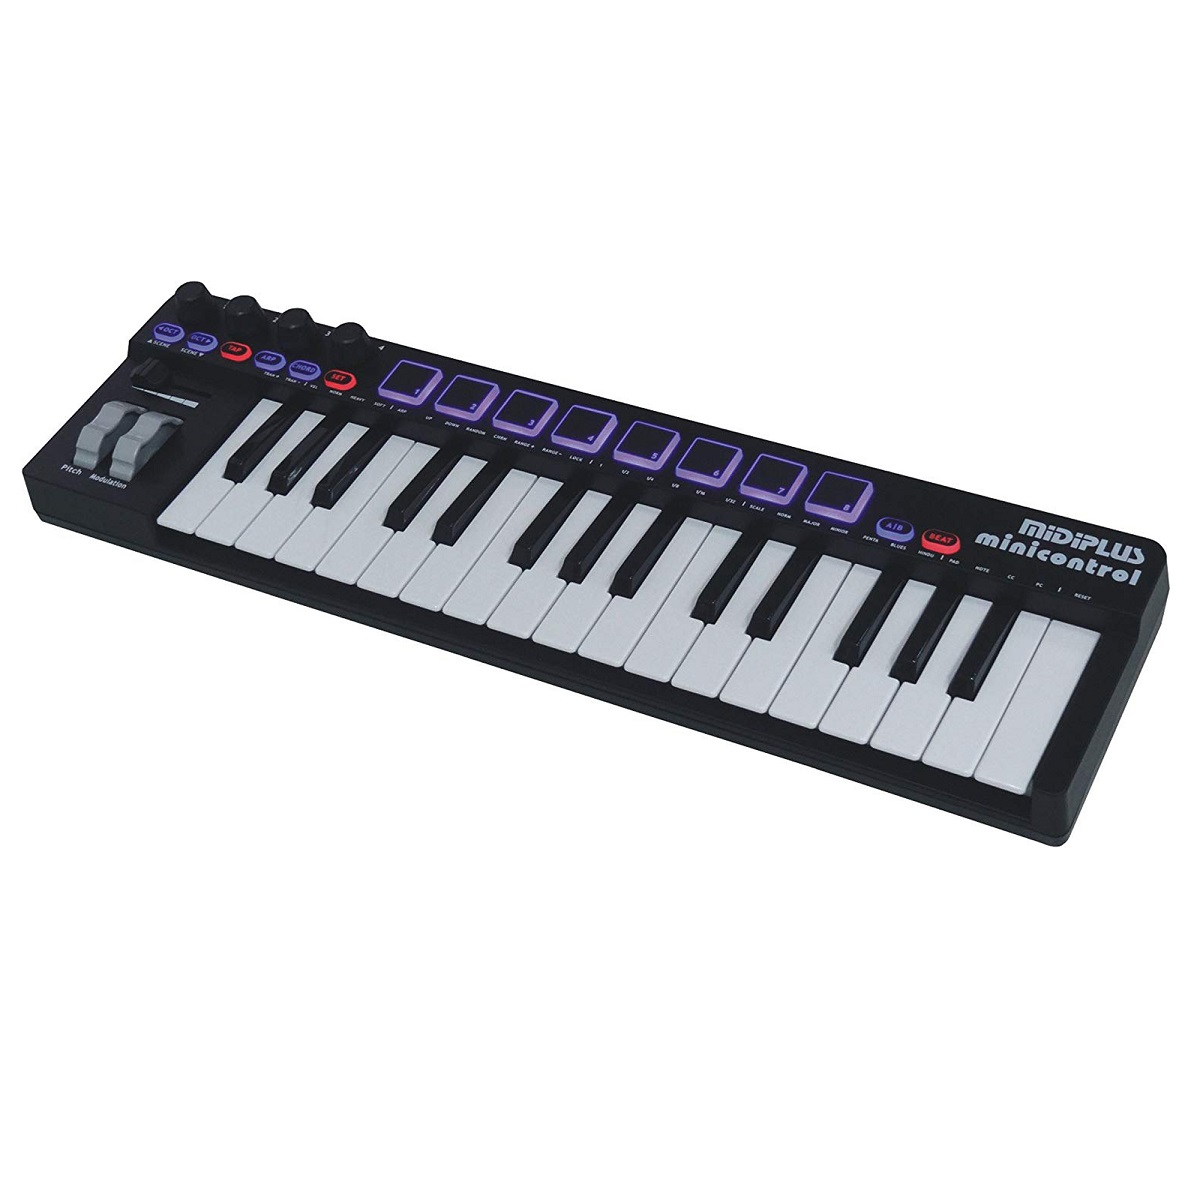 How To Control A MIDI Keyboard